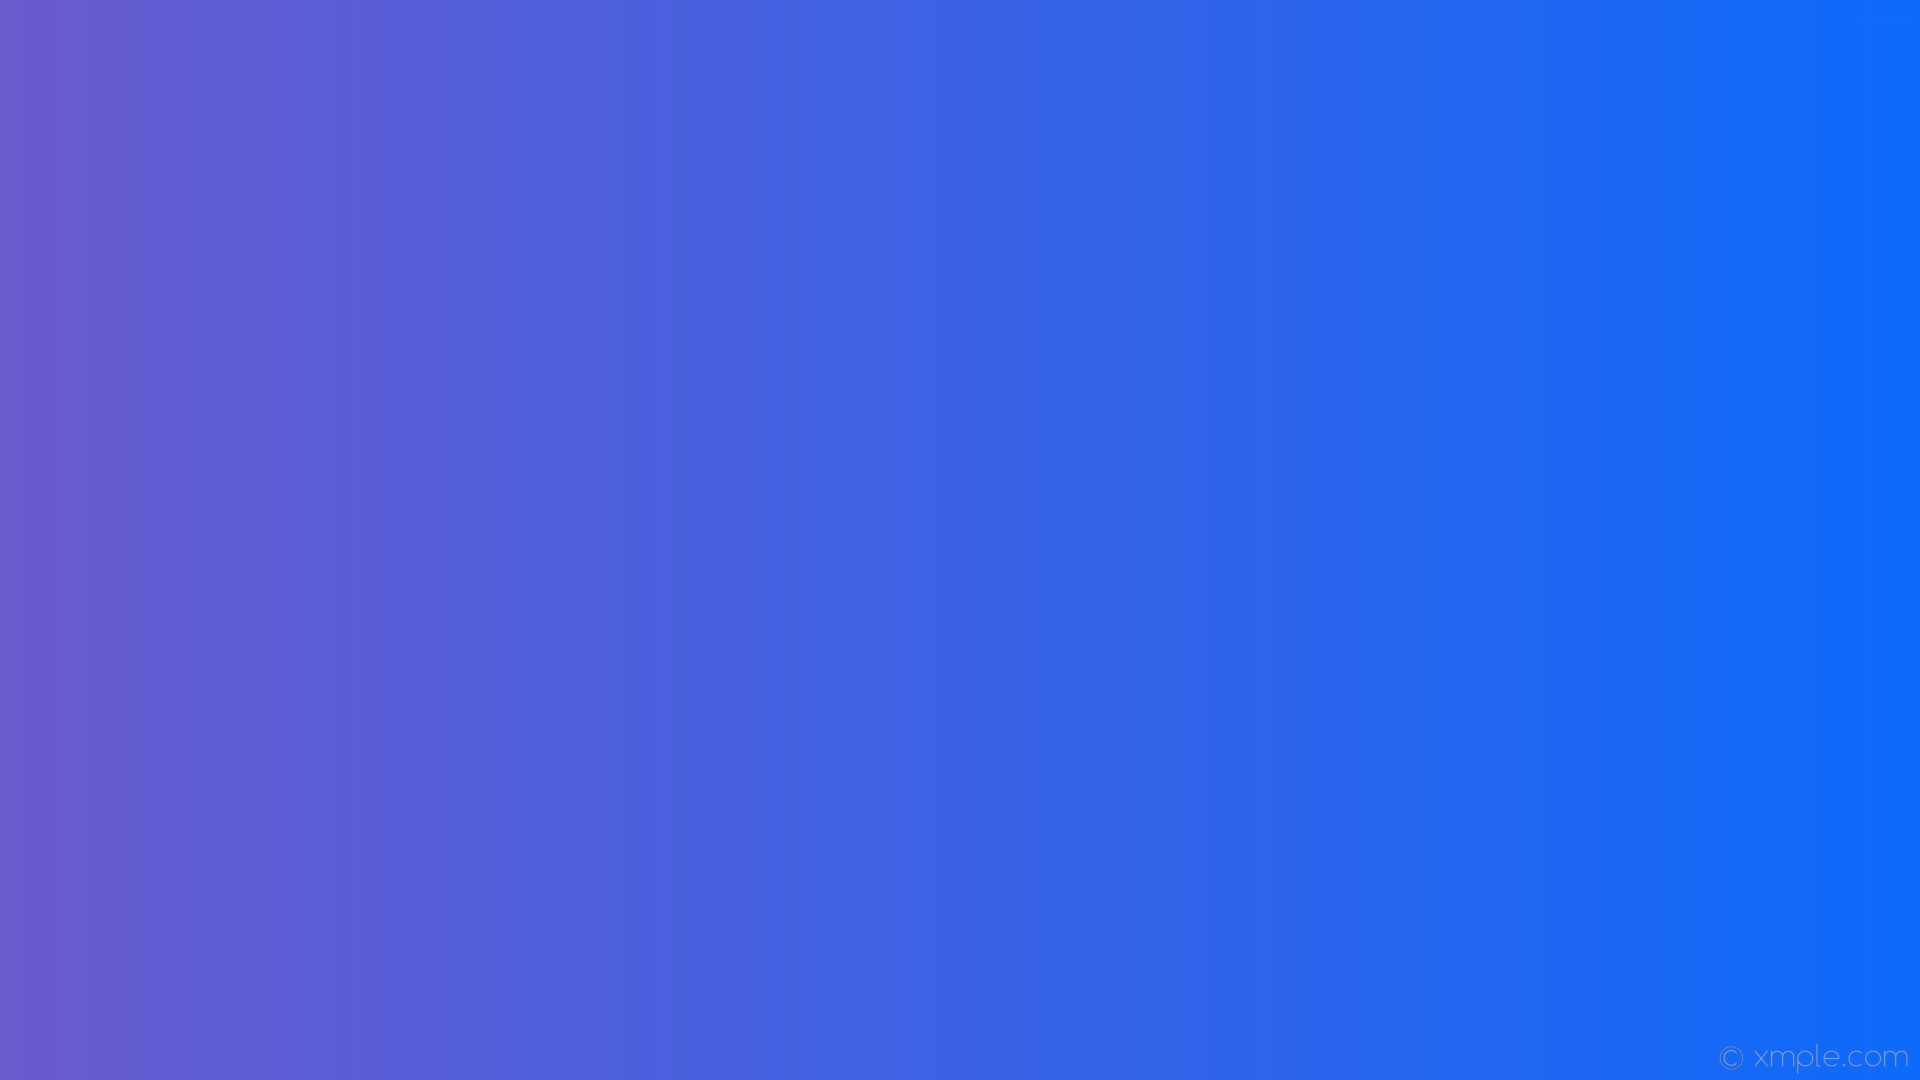 1920x1080 wallpaper azure gradient linear purple slate blue #0d6afb #6a5acd 0Â°